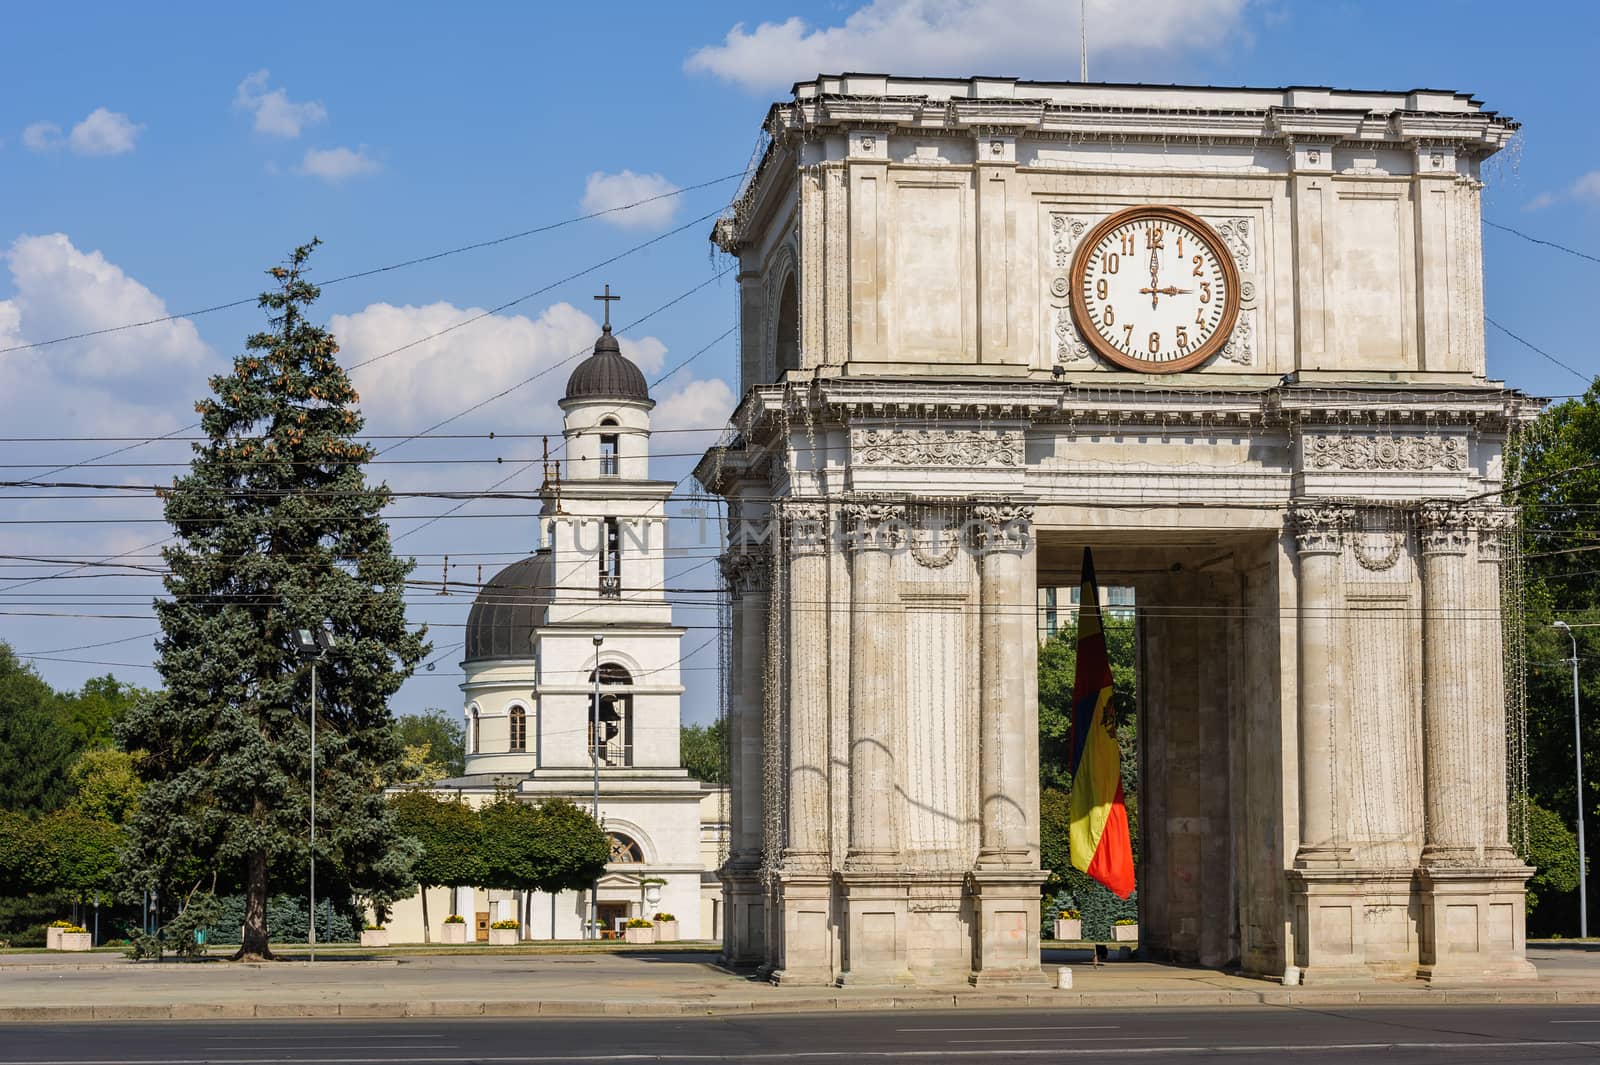 Triumphal Arch in Chisinau, Moldova by starush